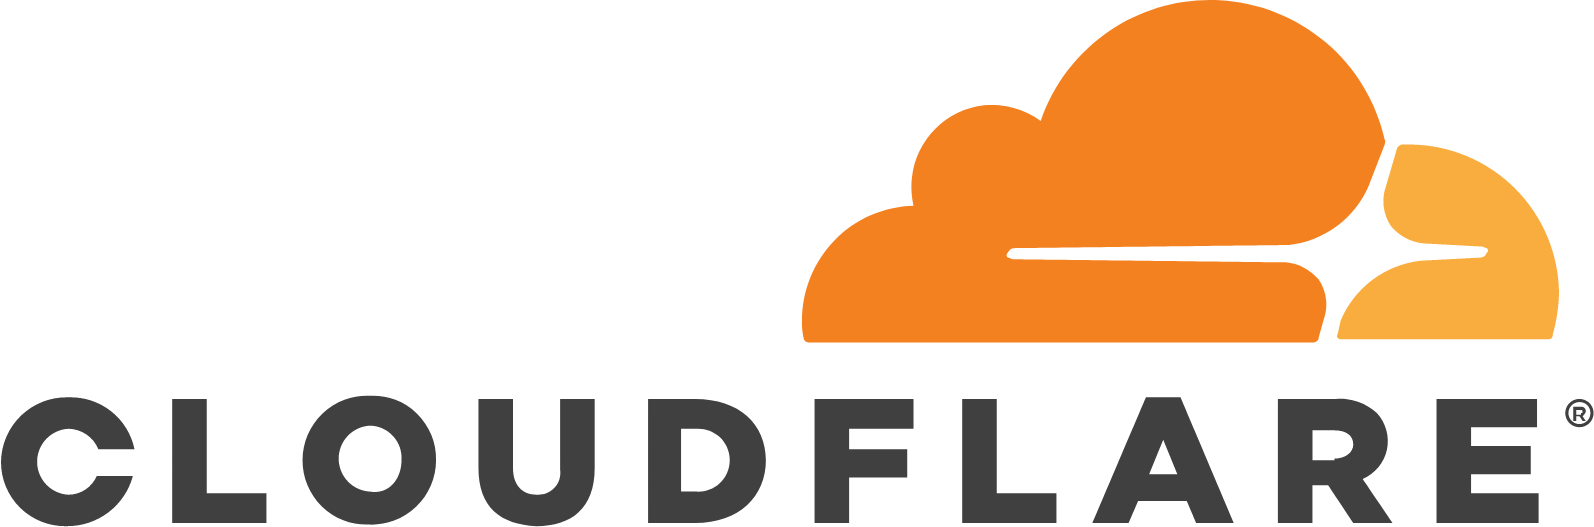 Cloudflare logo large (transparent PNG)